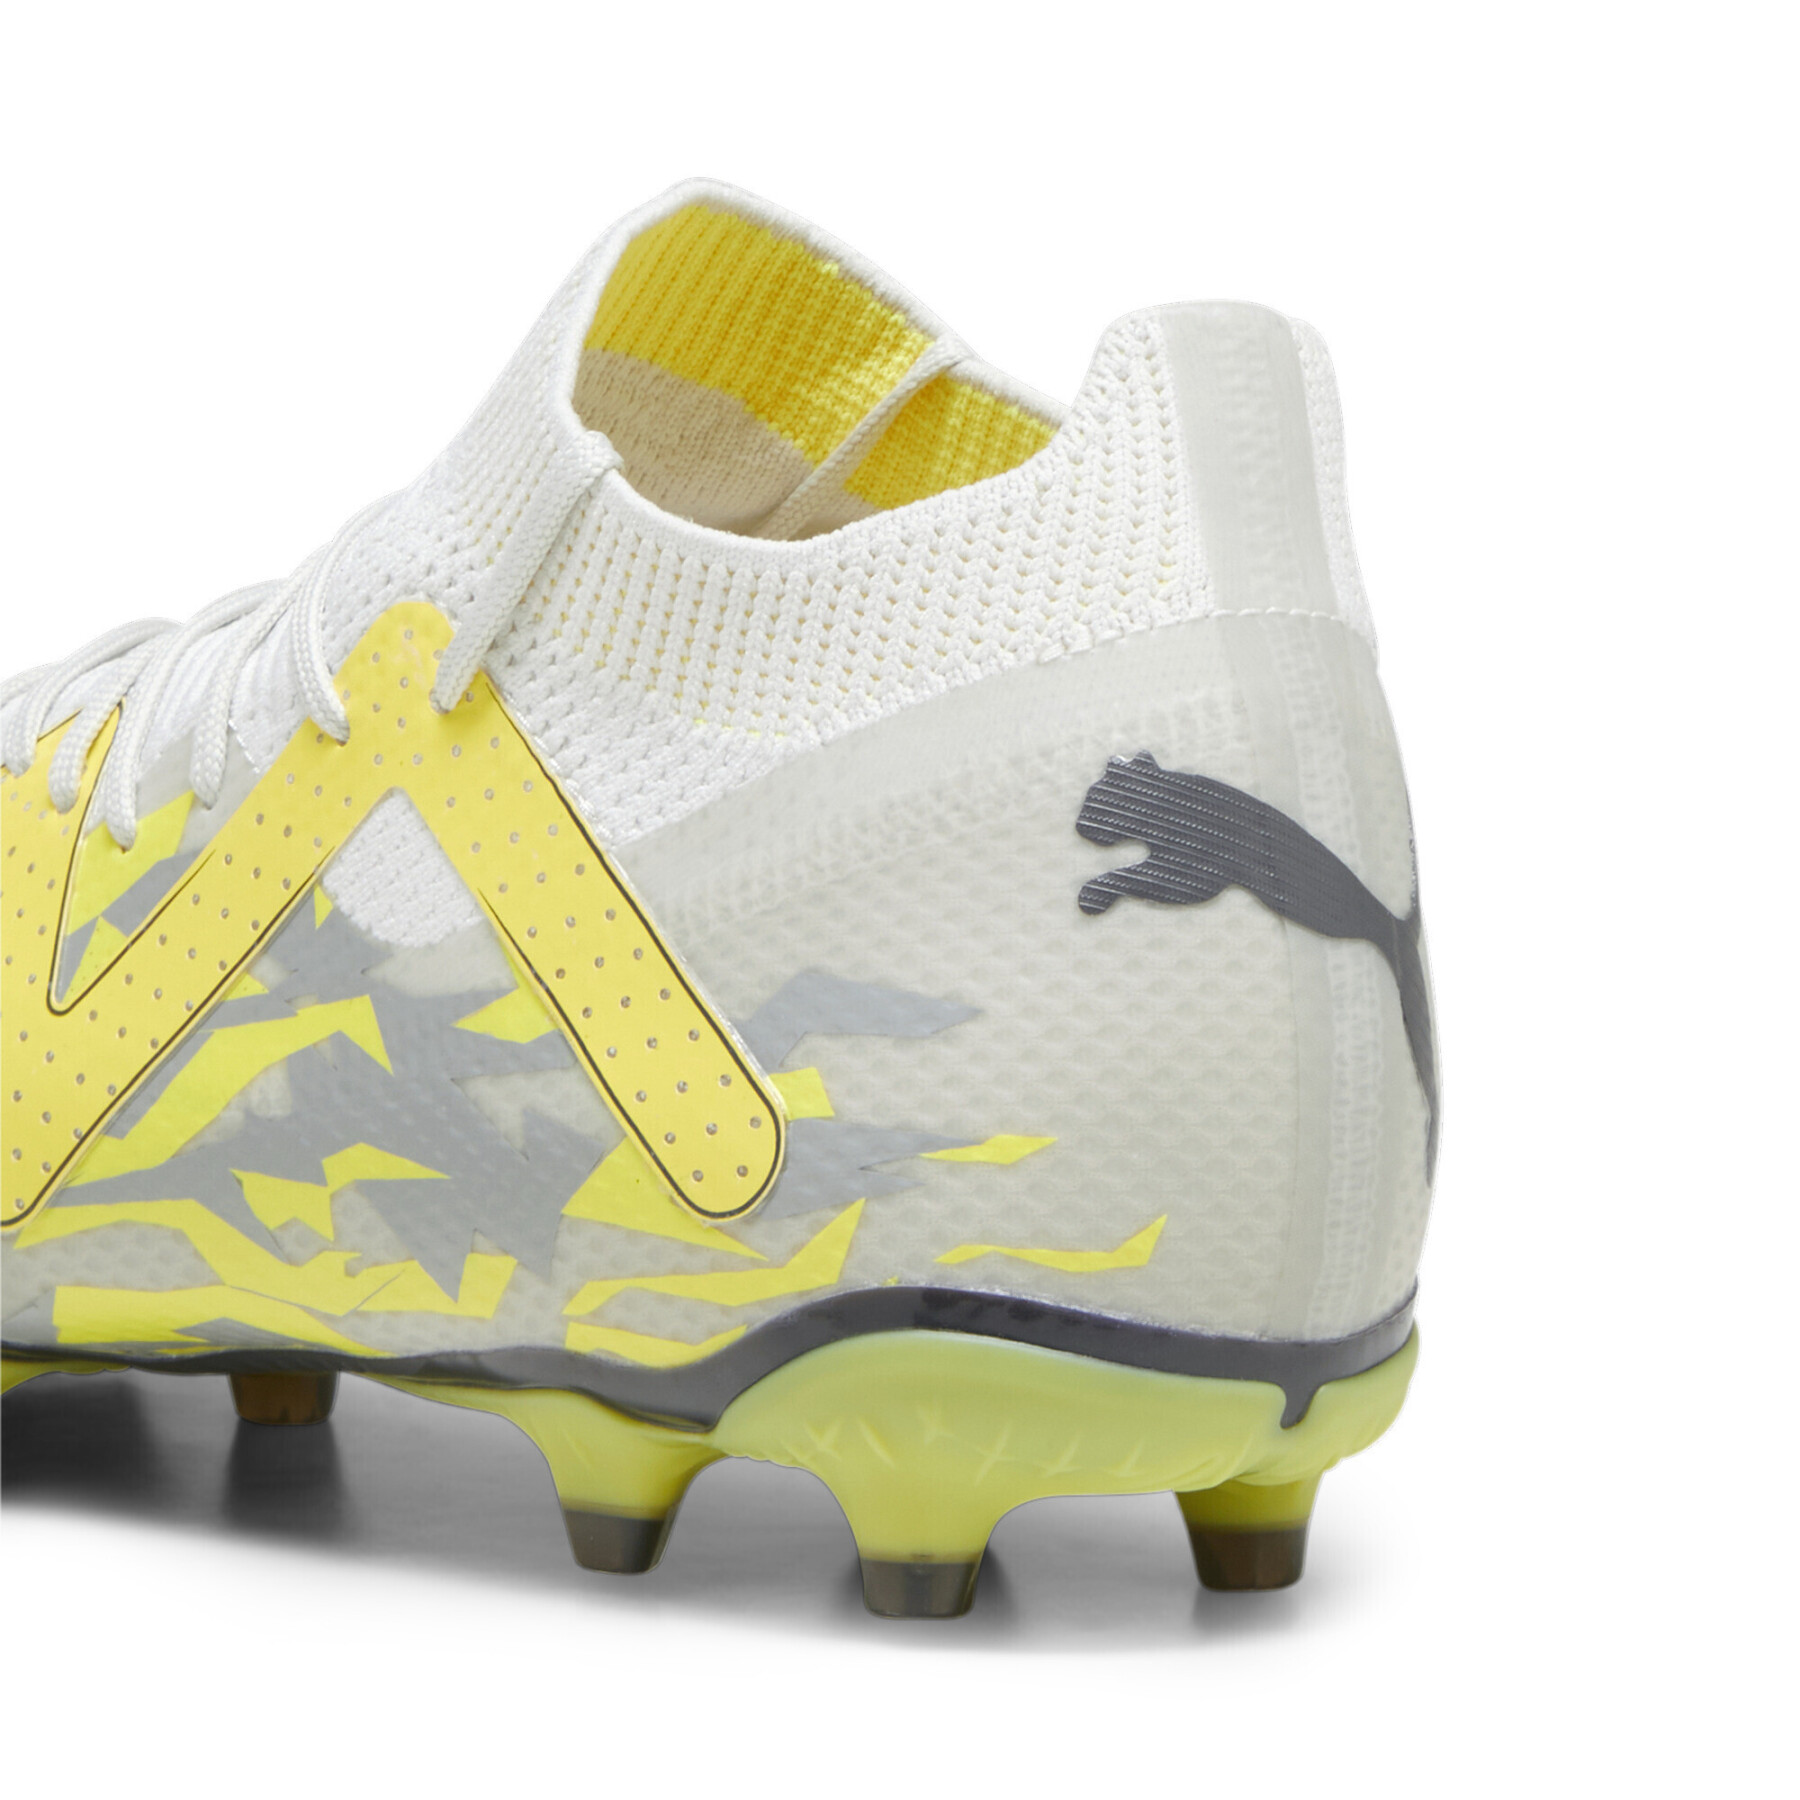 Soccer shoes Puma Future Pro FG/AG - Voltage Pack